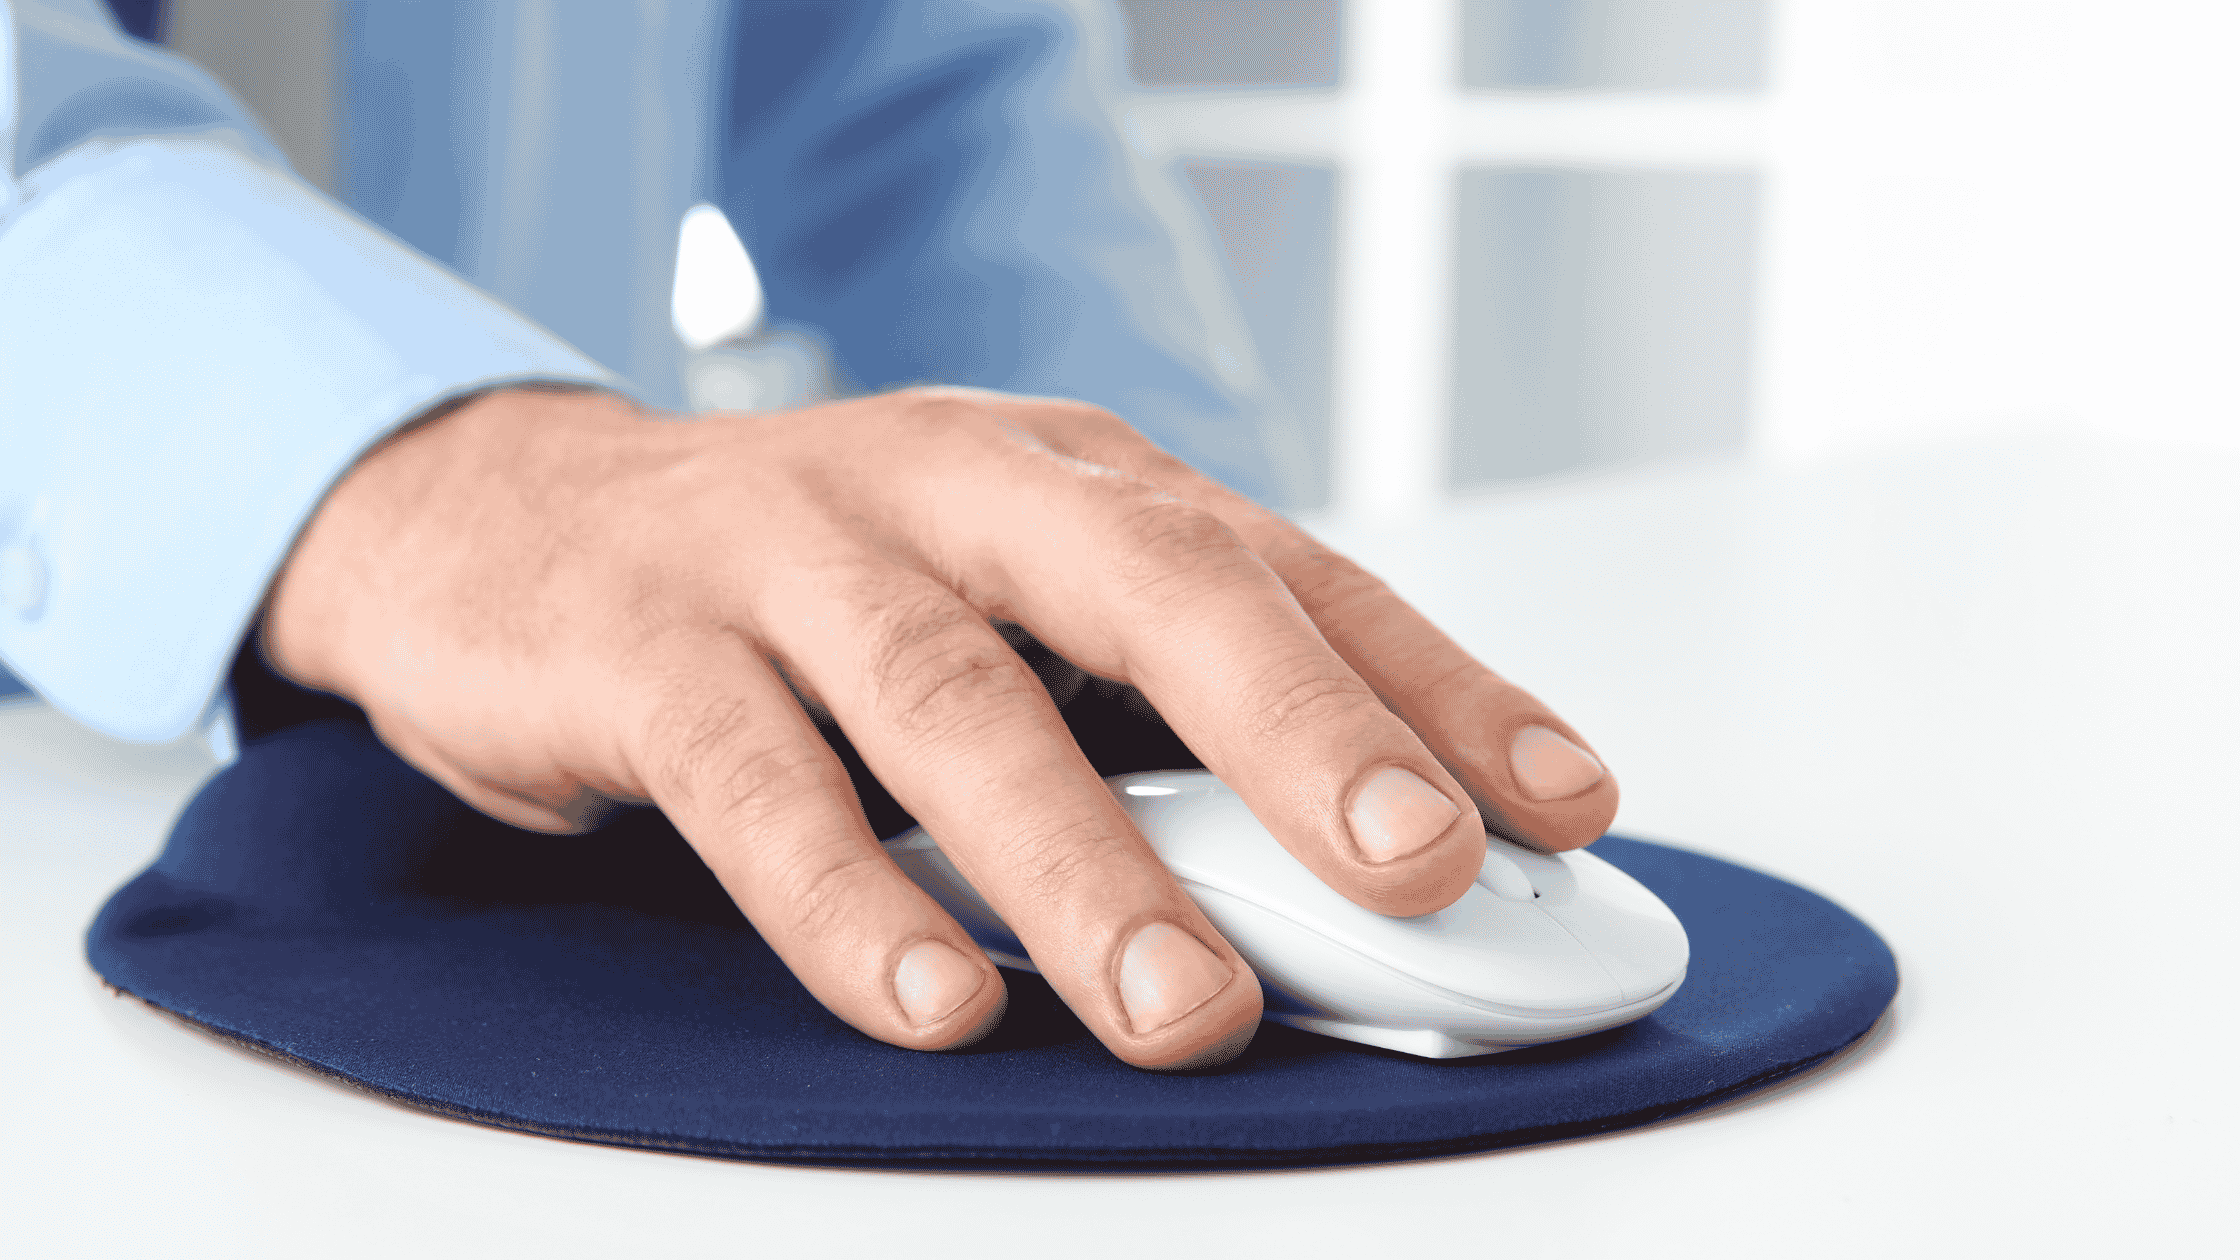 Non-Slip Base Hugogo Mouse Pad With Wrist Rest Support Basics Ergonomic Computer Gaming Office Mousepad Memory Foam 